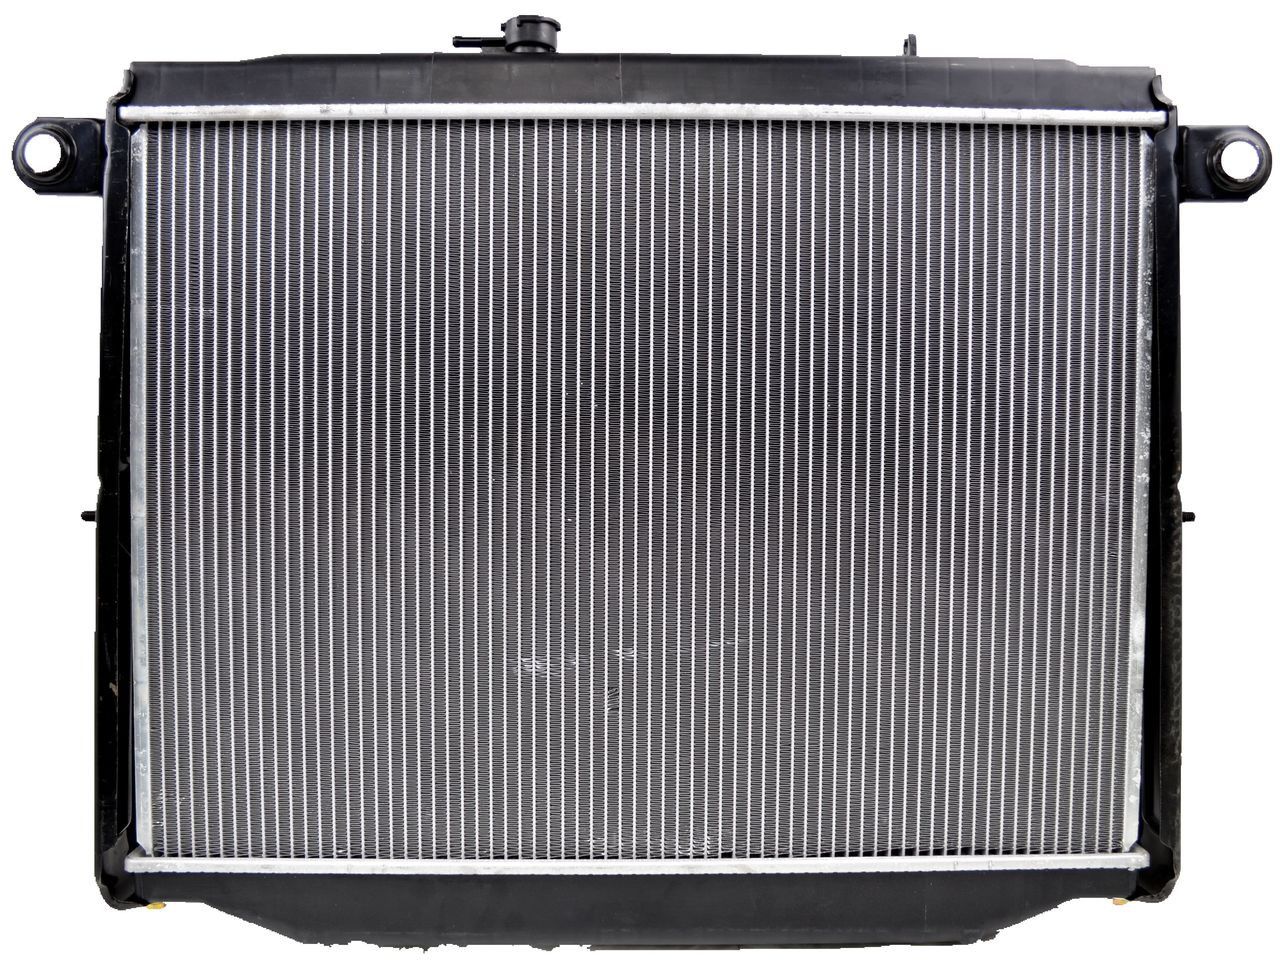 Radiator for Lexus LX470 01/98-07/07 Auto Manual UZJ100 4.7L V8 Petrol 99 00 02 03 04 05 06